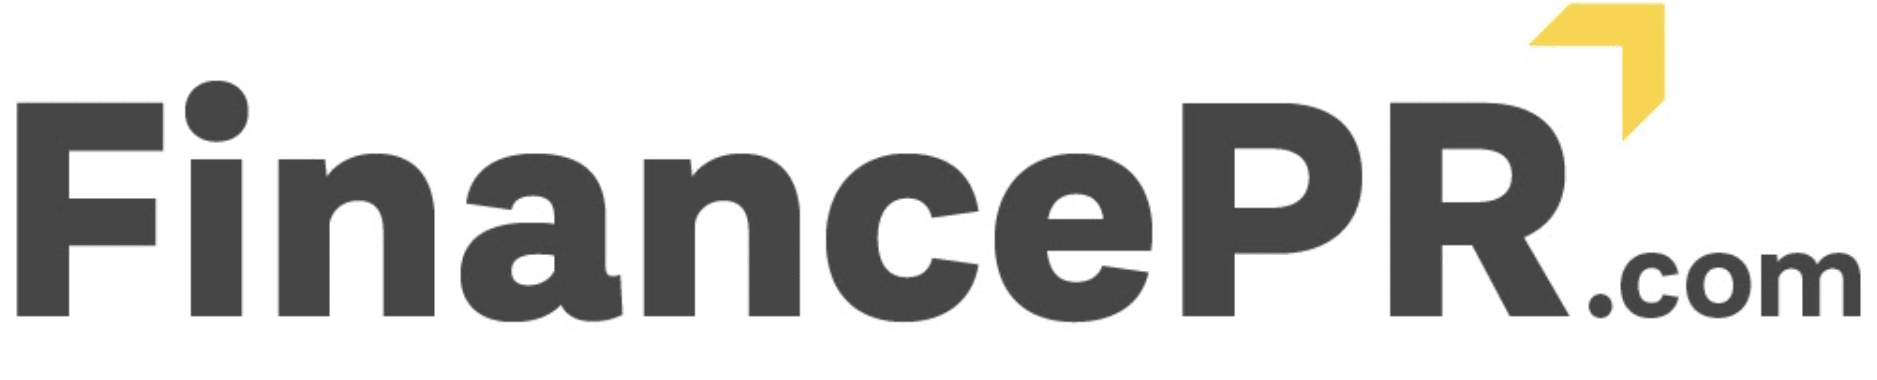 financepr logo